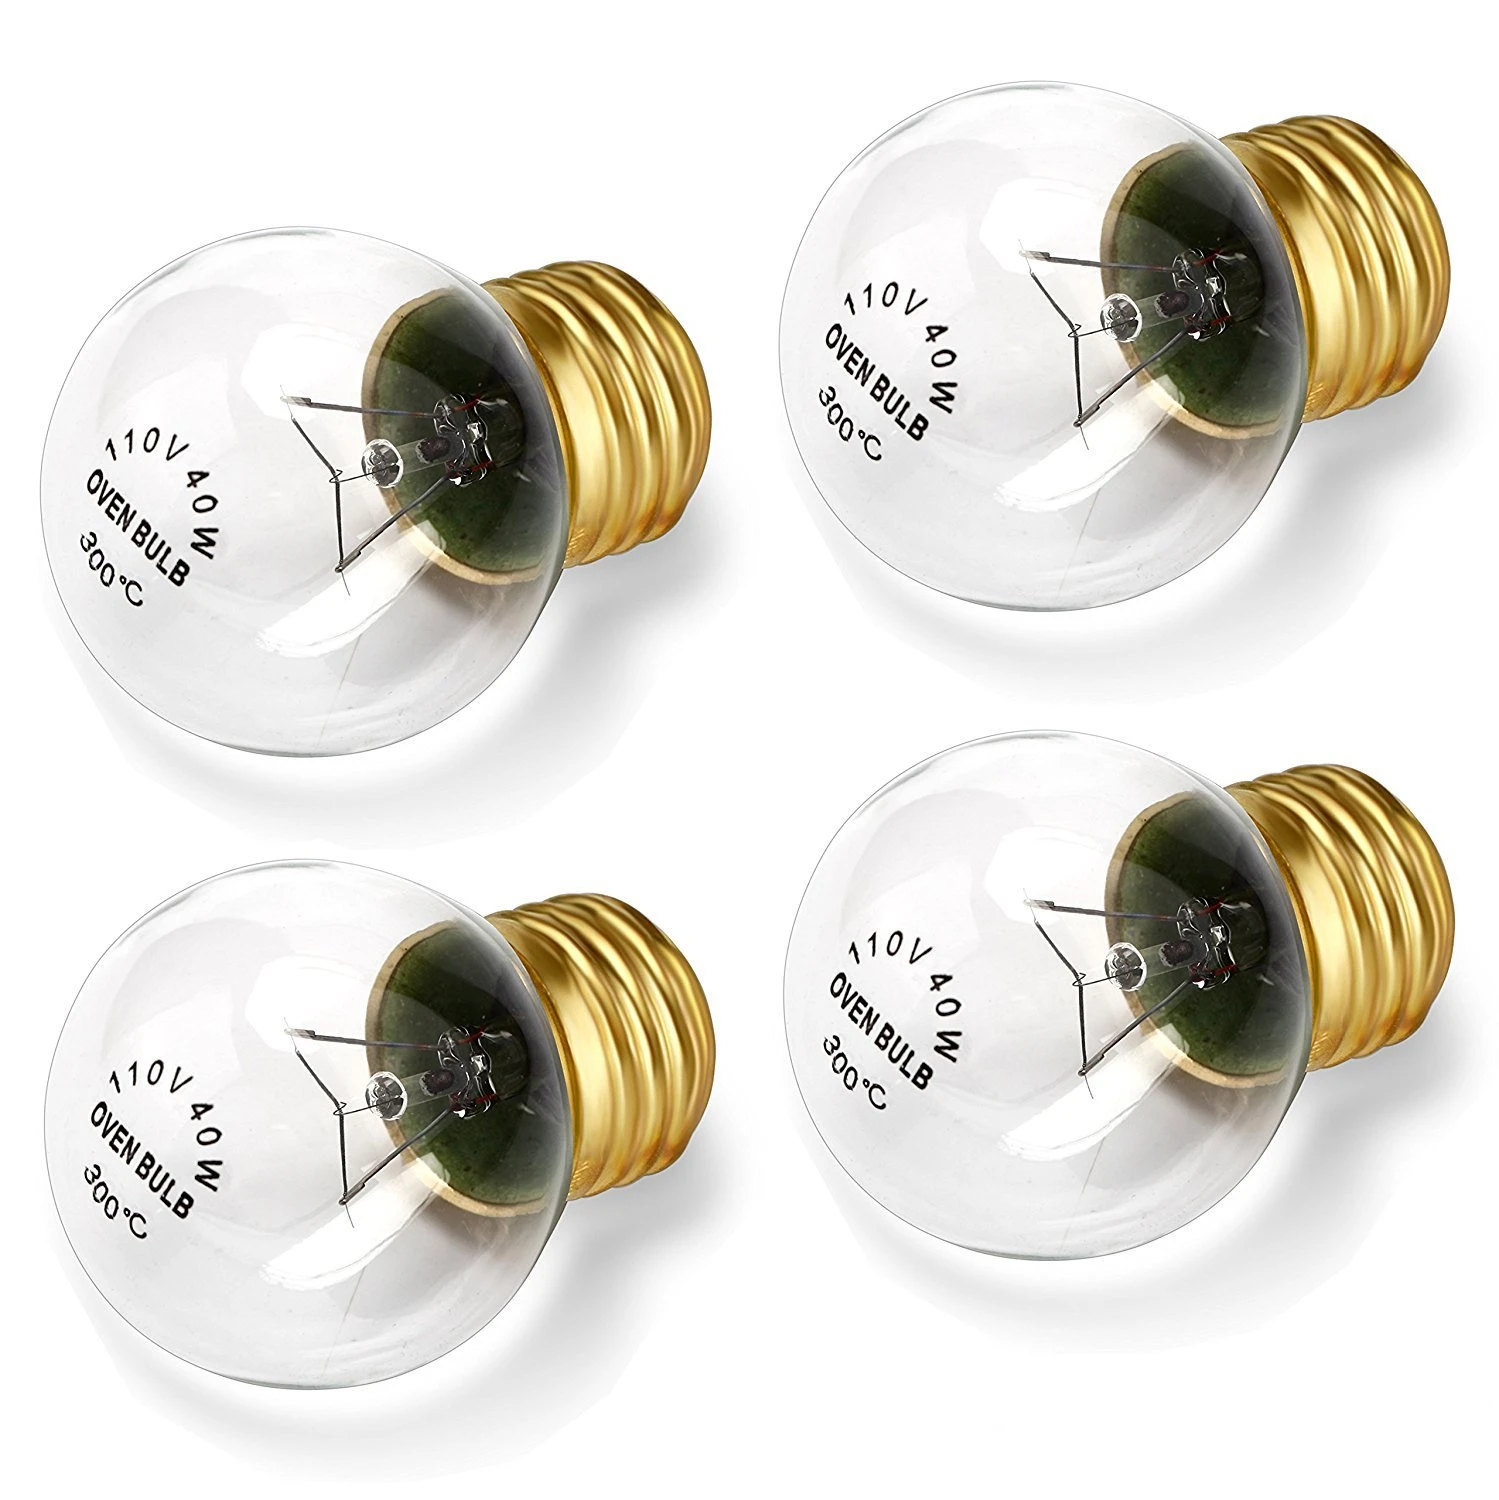 Europe market Hotsale G45 Incandescent bulbs for Freezer